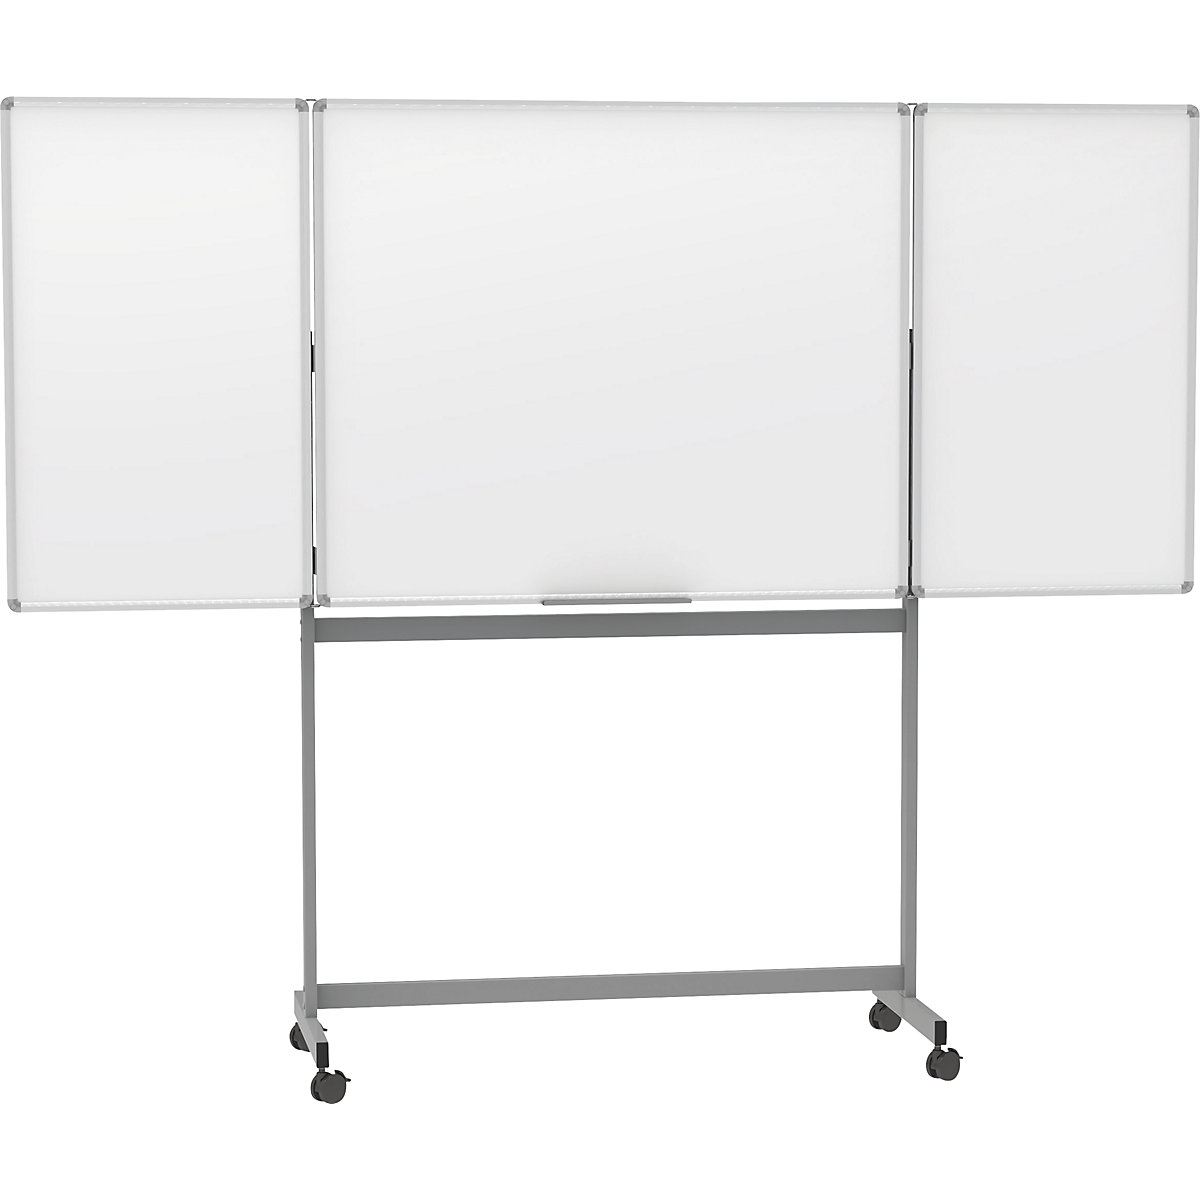 MAULstandard mobile folding board - MAUL